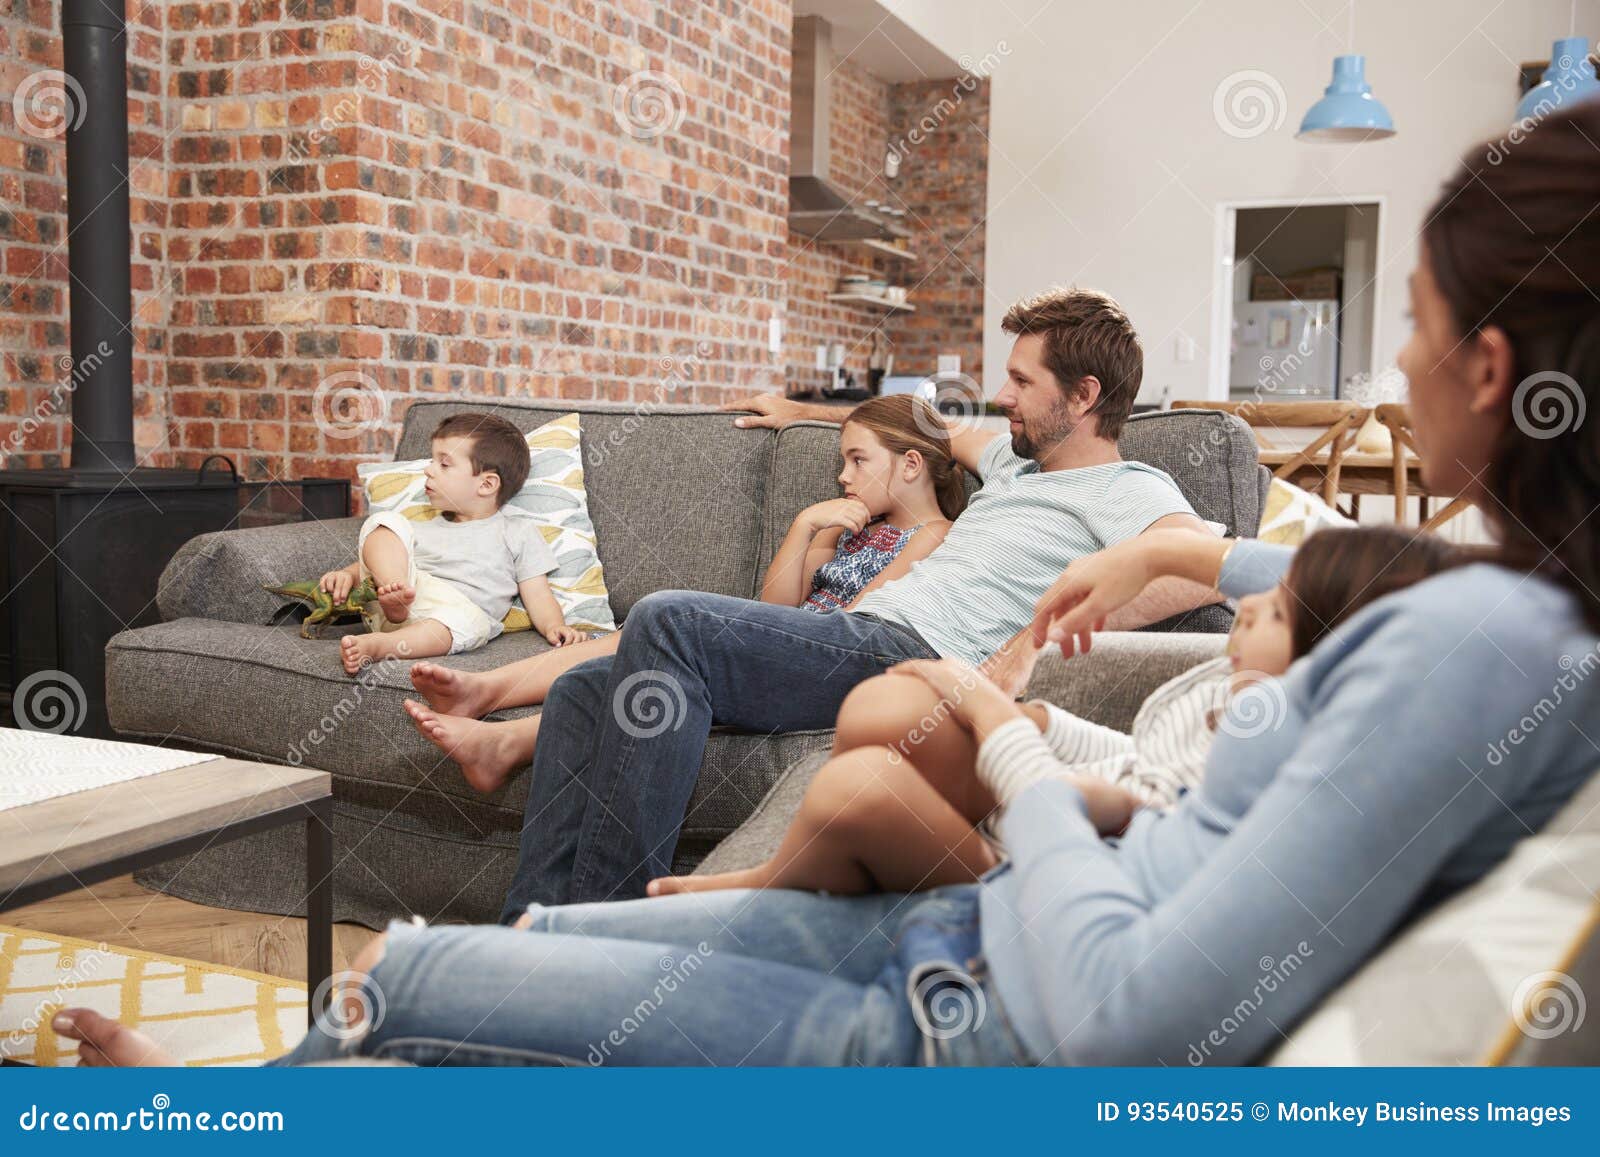 settlement The actual fence Η οικογένεια κάθεται στον καναπέ στην ανοικτή τηλεόραση προσοχής σαλονιών  σχεδίων Στοκ Εικόνα - εικόνα από : 93540525